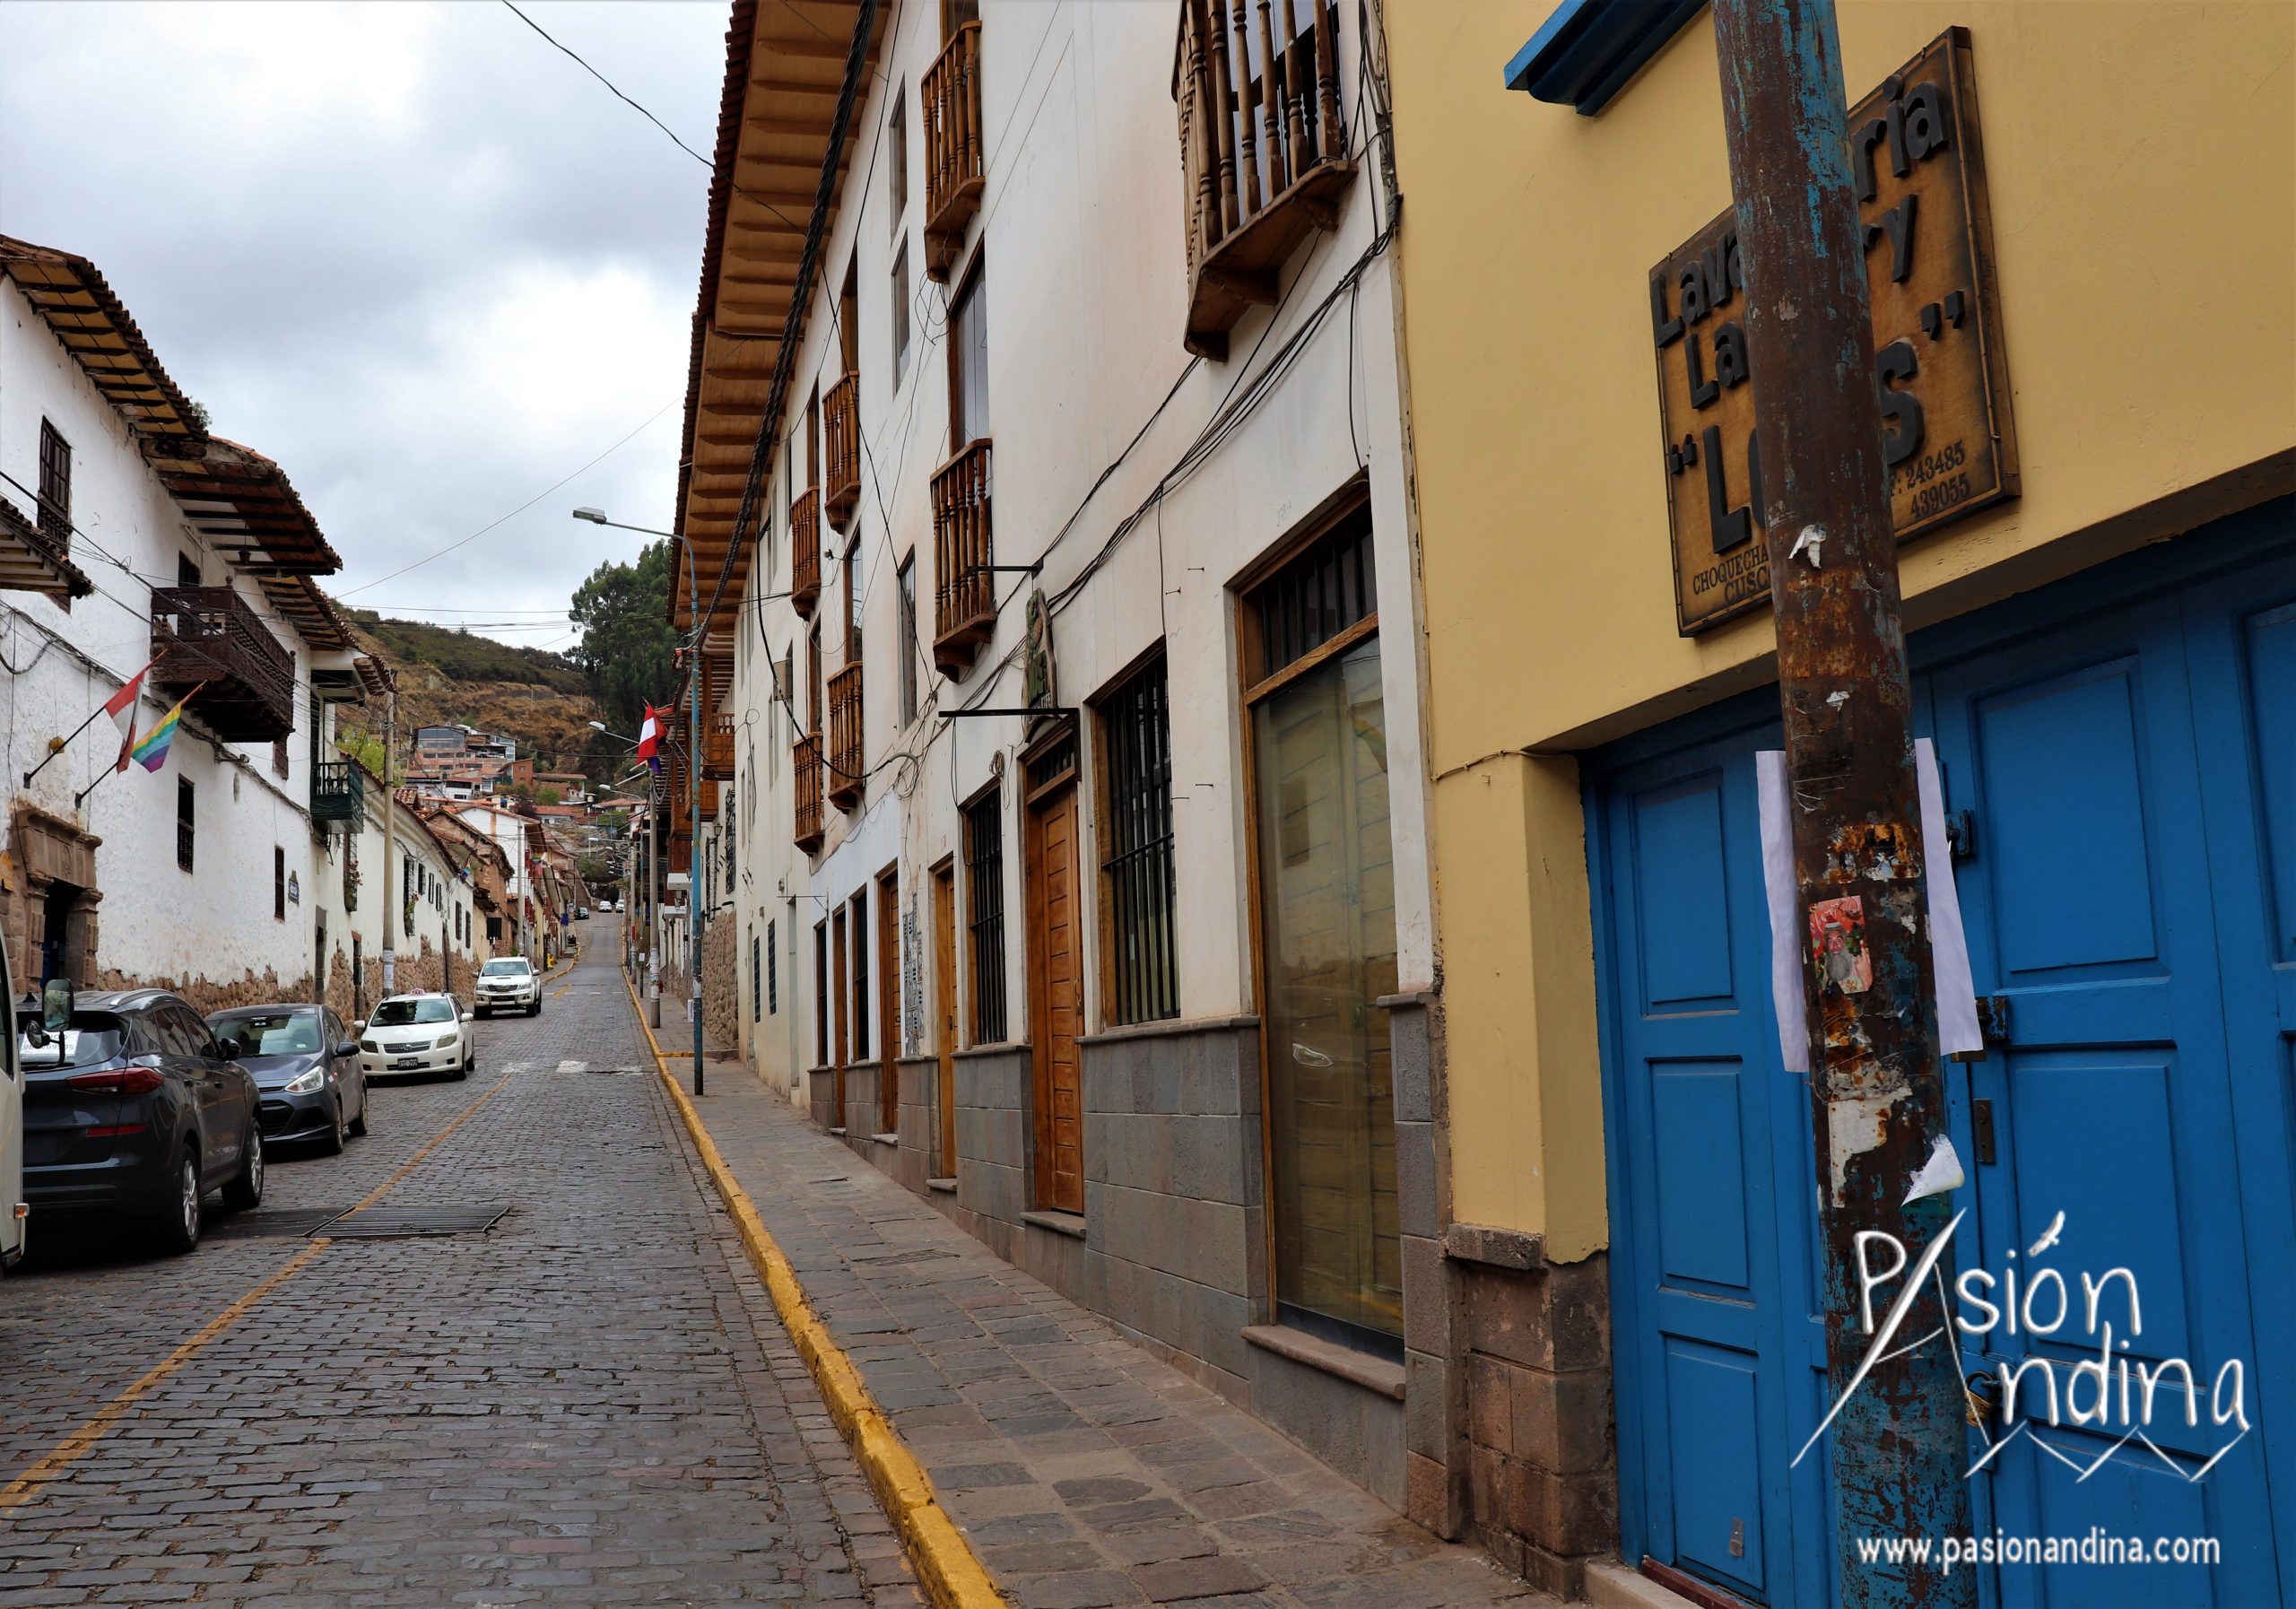 Calle Choqechaka - Pasion Andina - Cusco